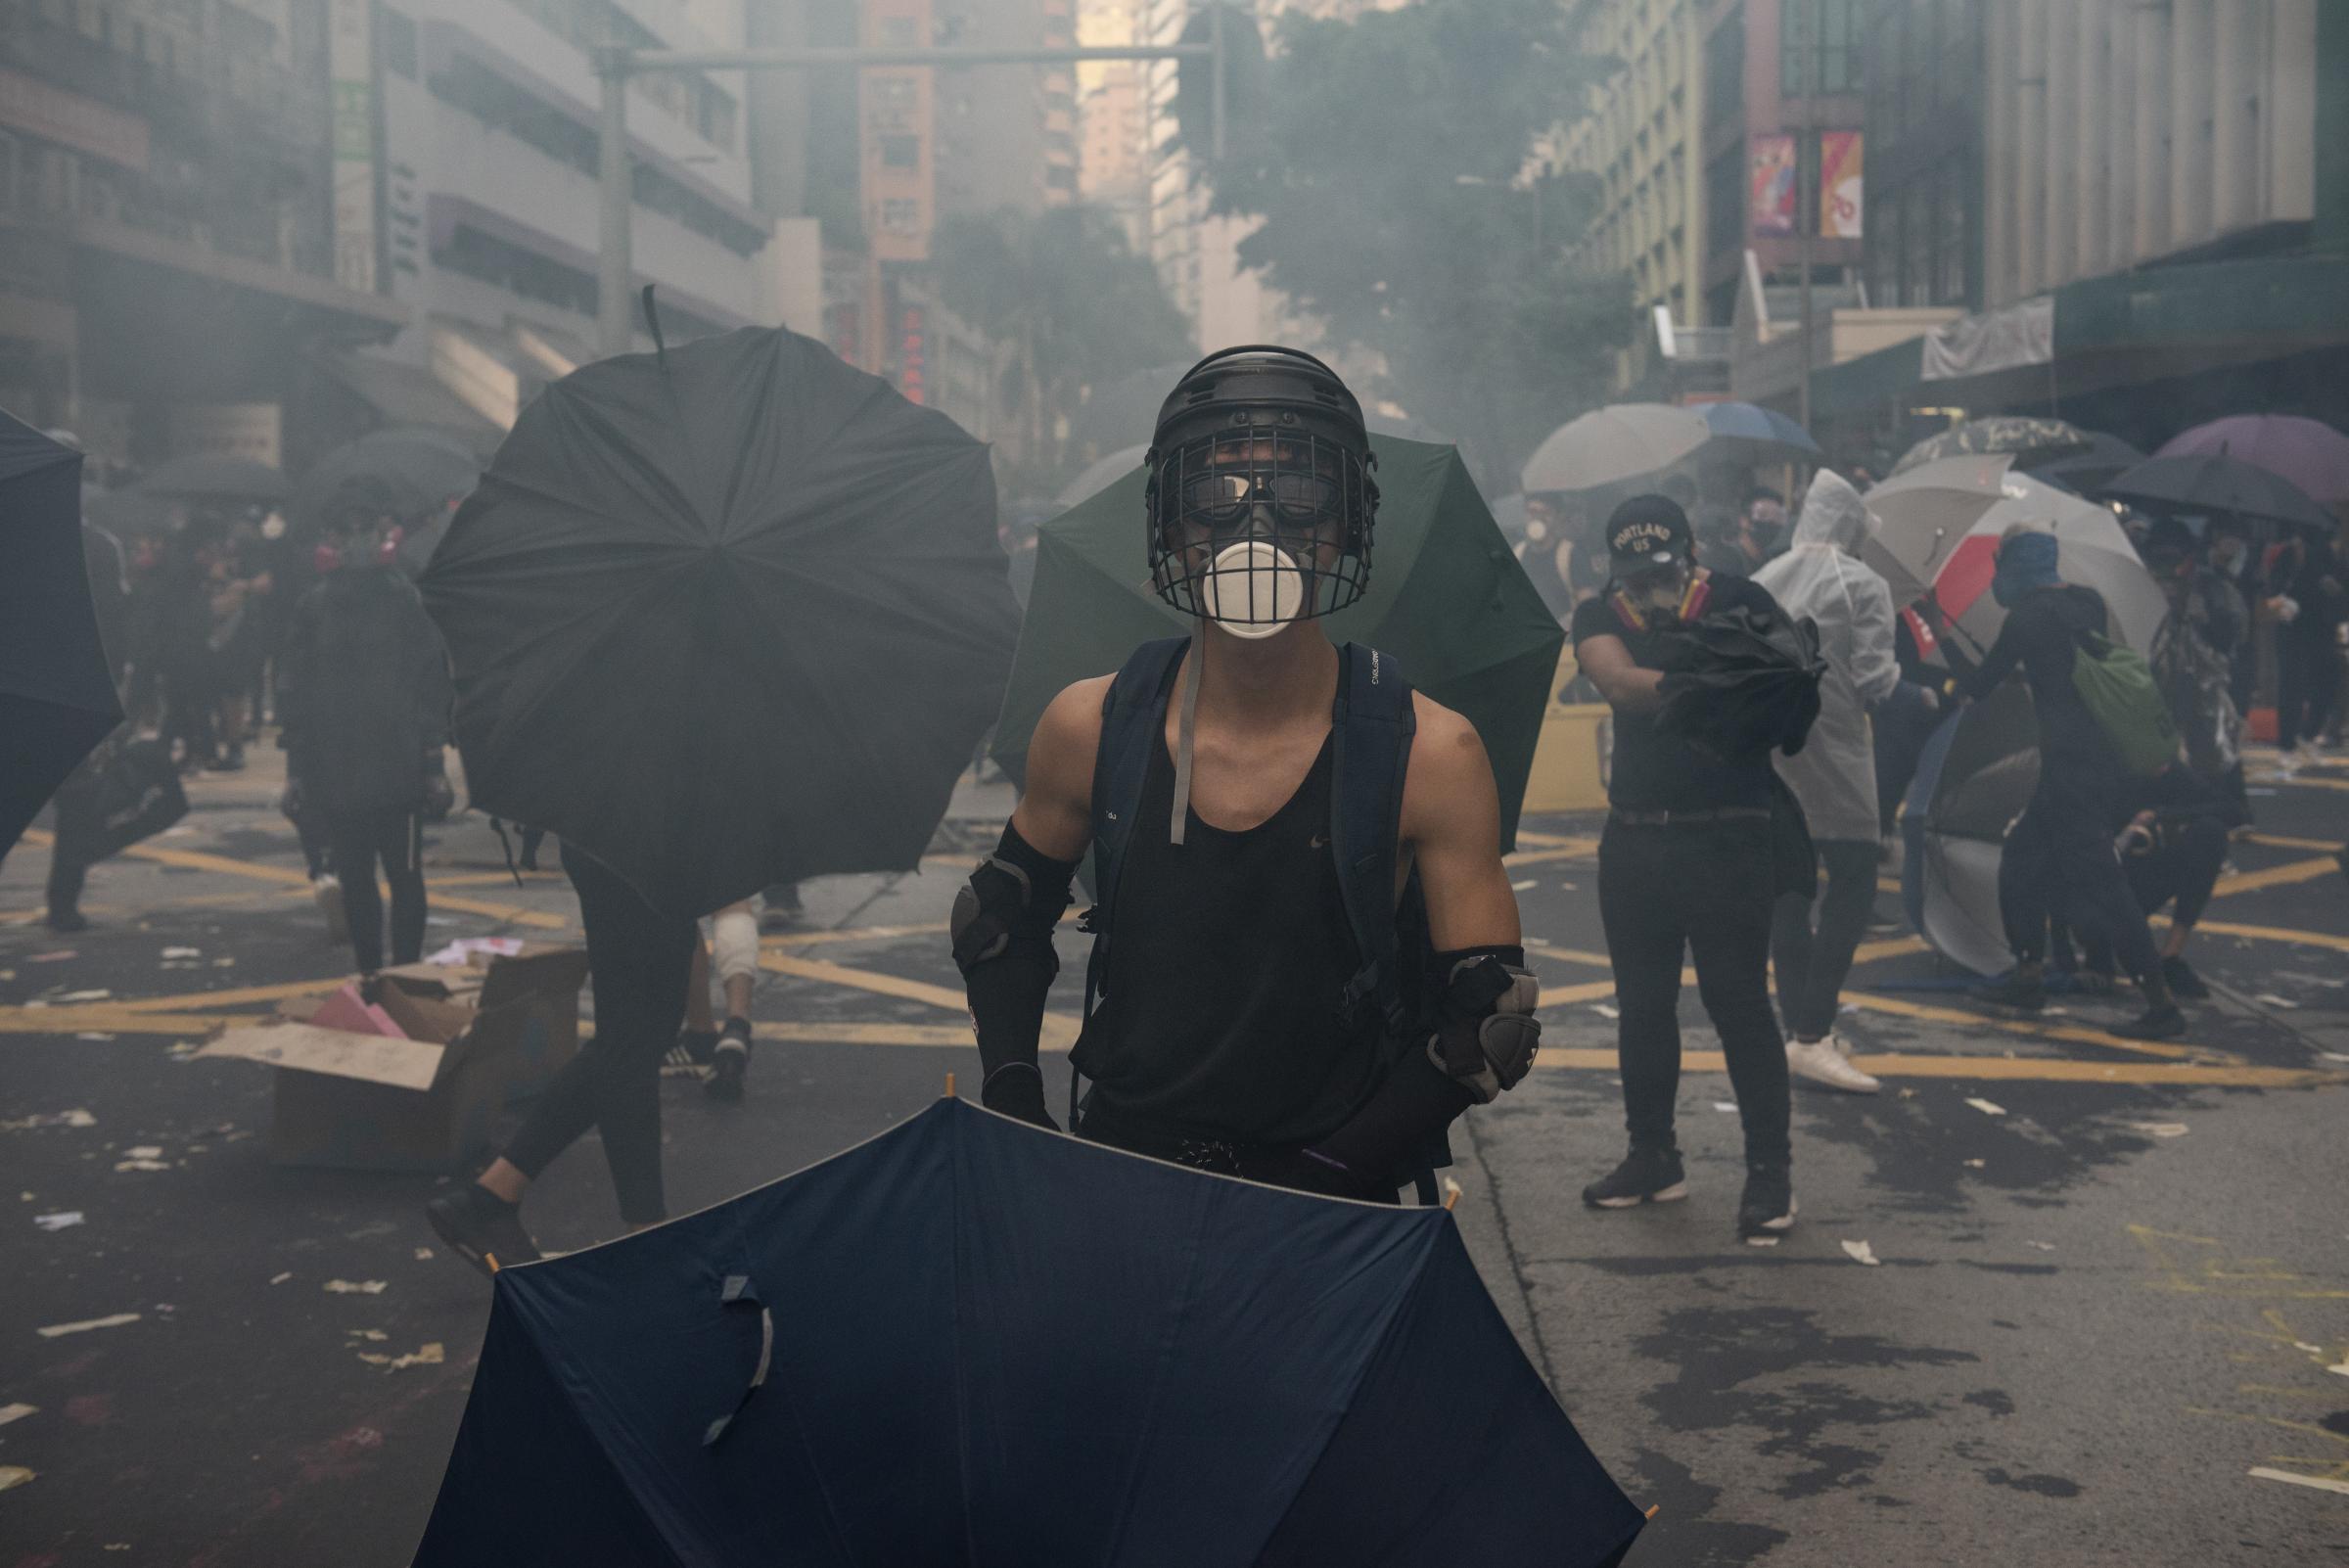 Hong Kong protests China on 70th anniversary of its founding